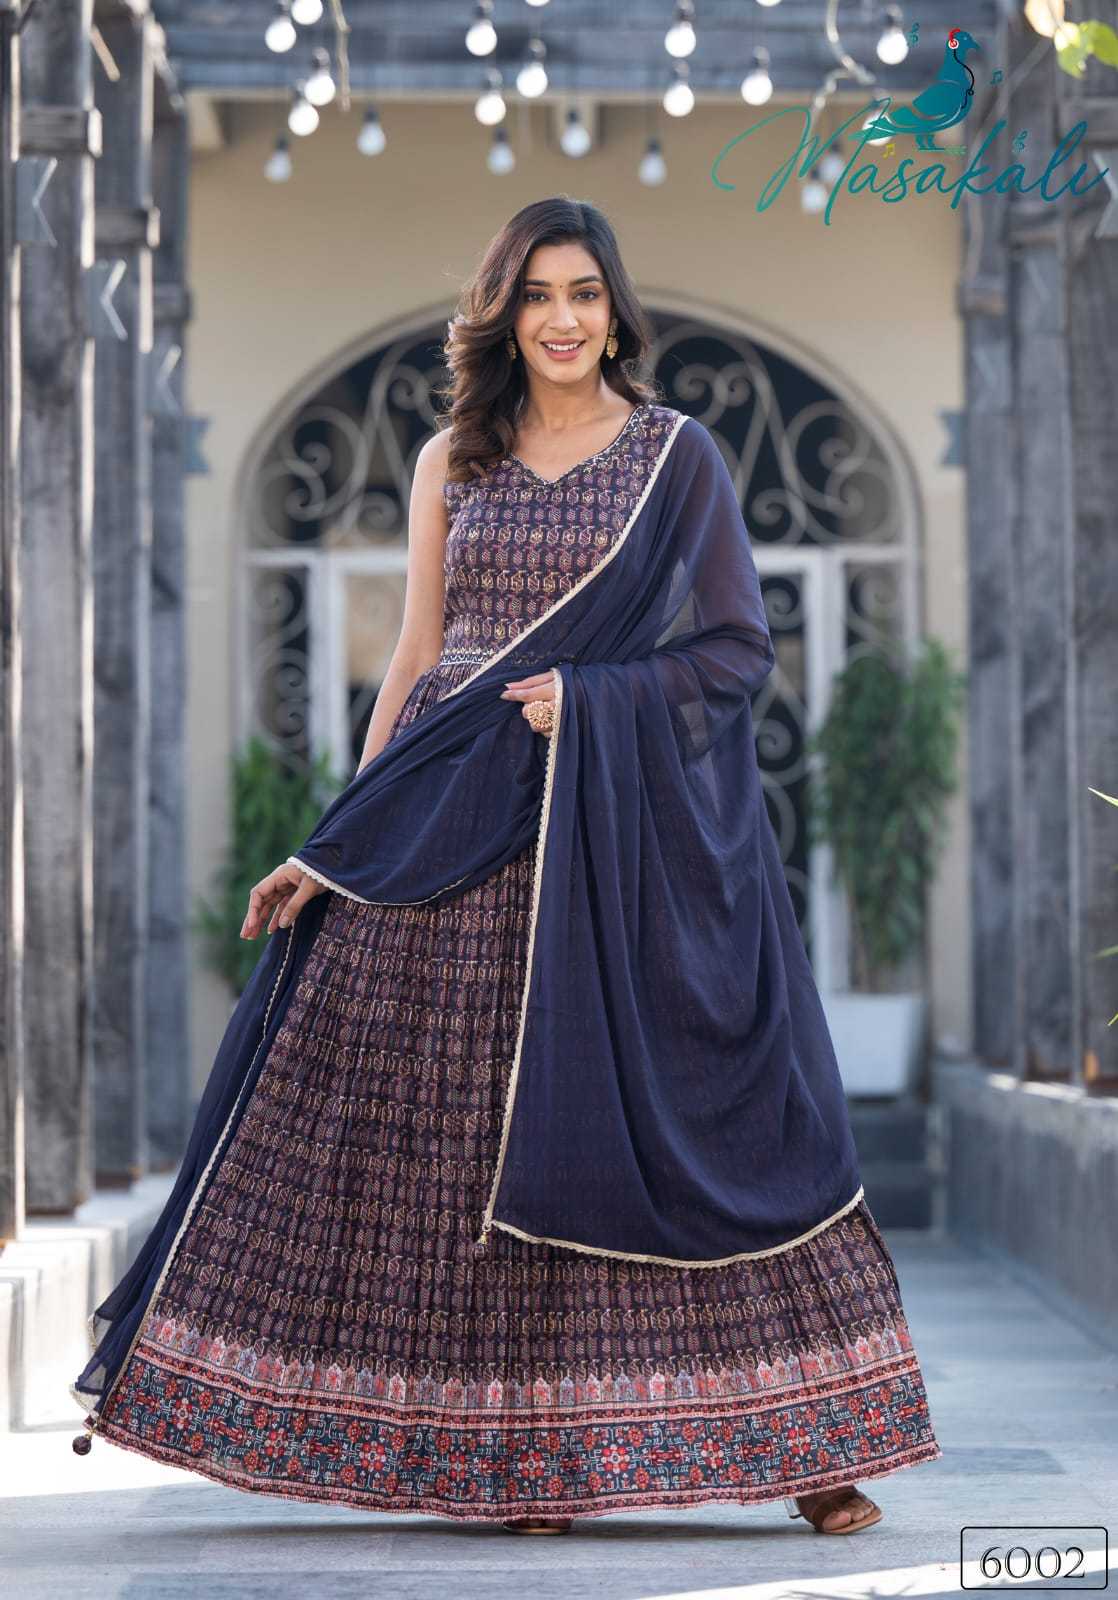 virasat masakali vol 6 fullstitch exclusive designer long flair gown with dupatta